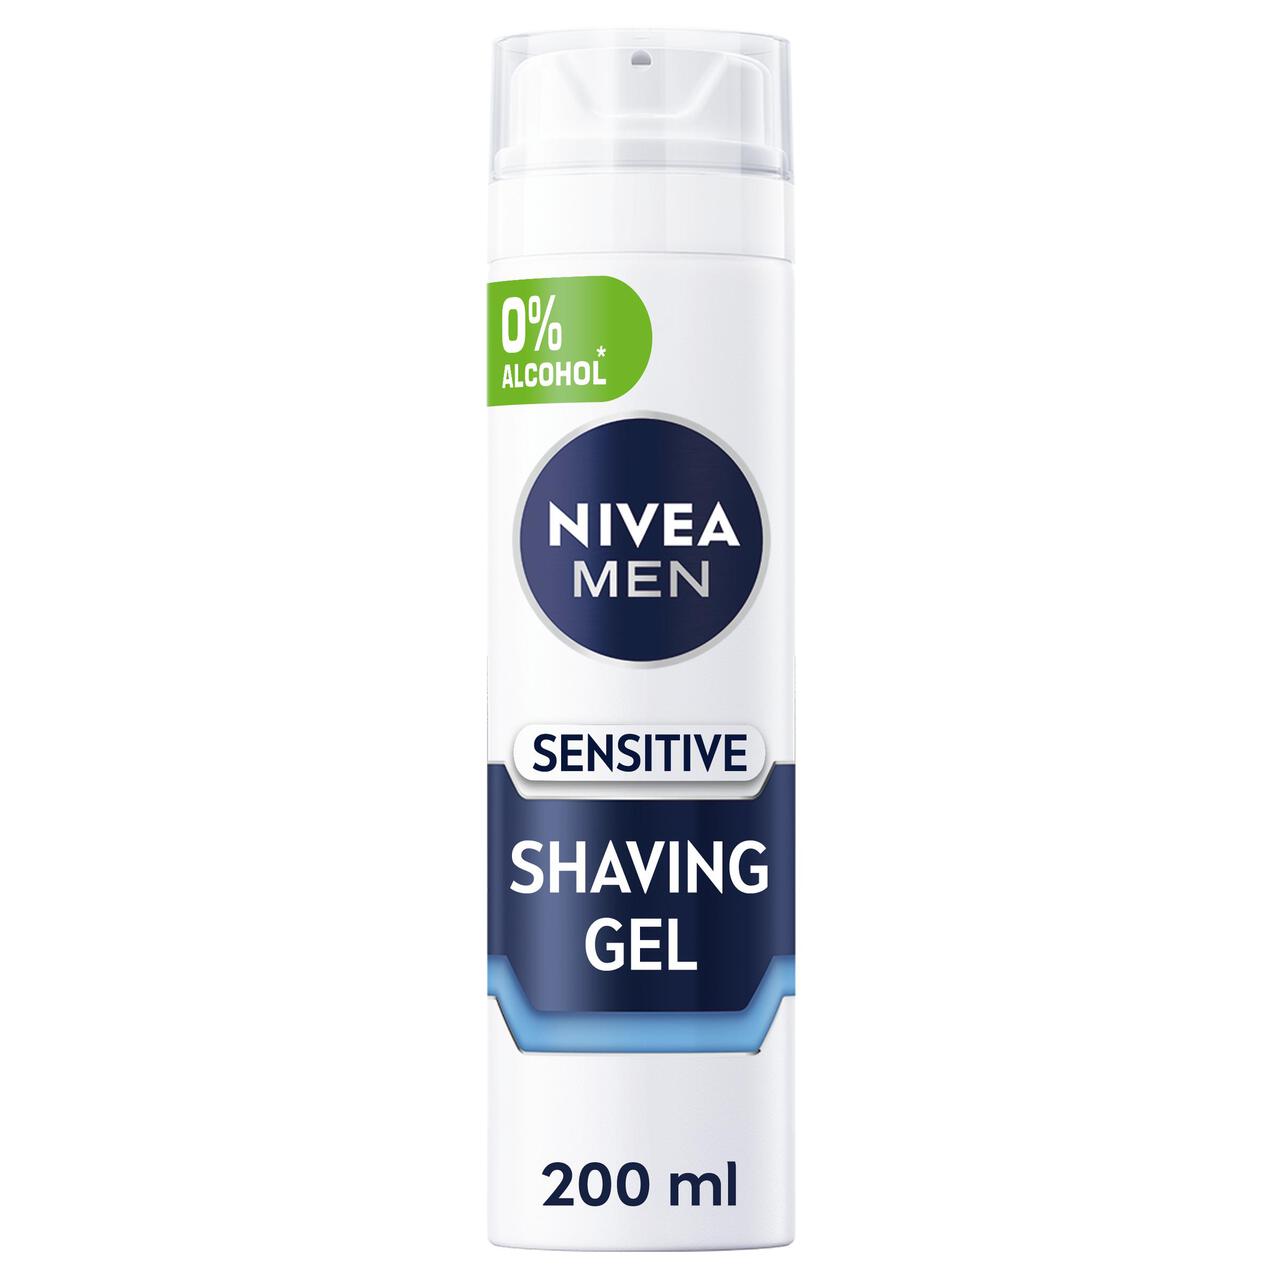 NIVEA MEN Sensitive Shaving Gel with 0 % Alcohol 200ml